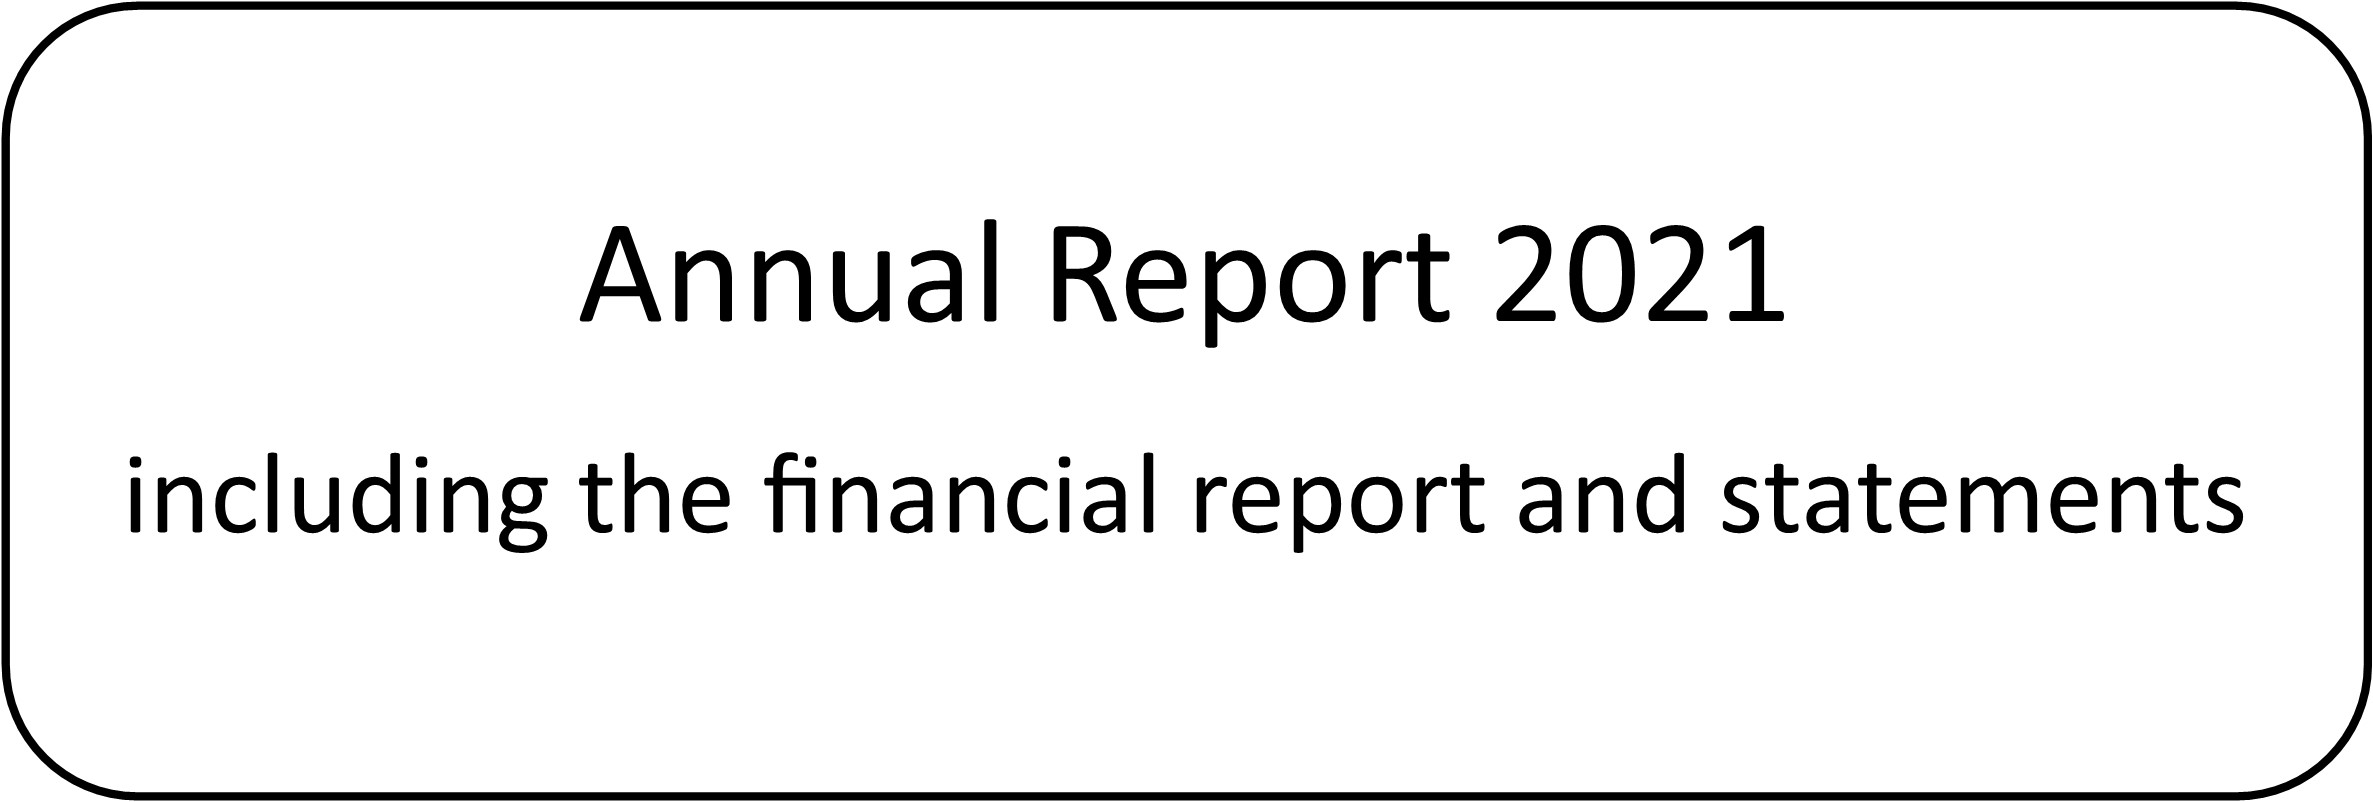 21 Annual report